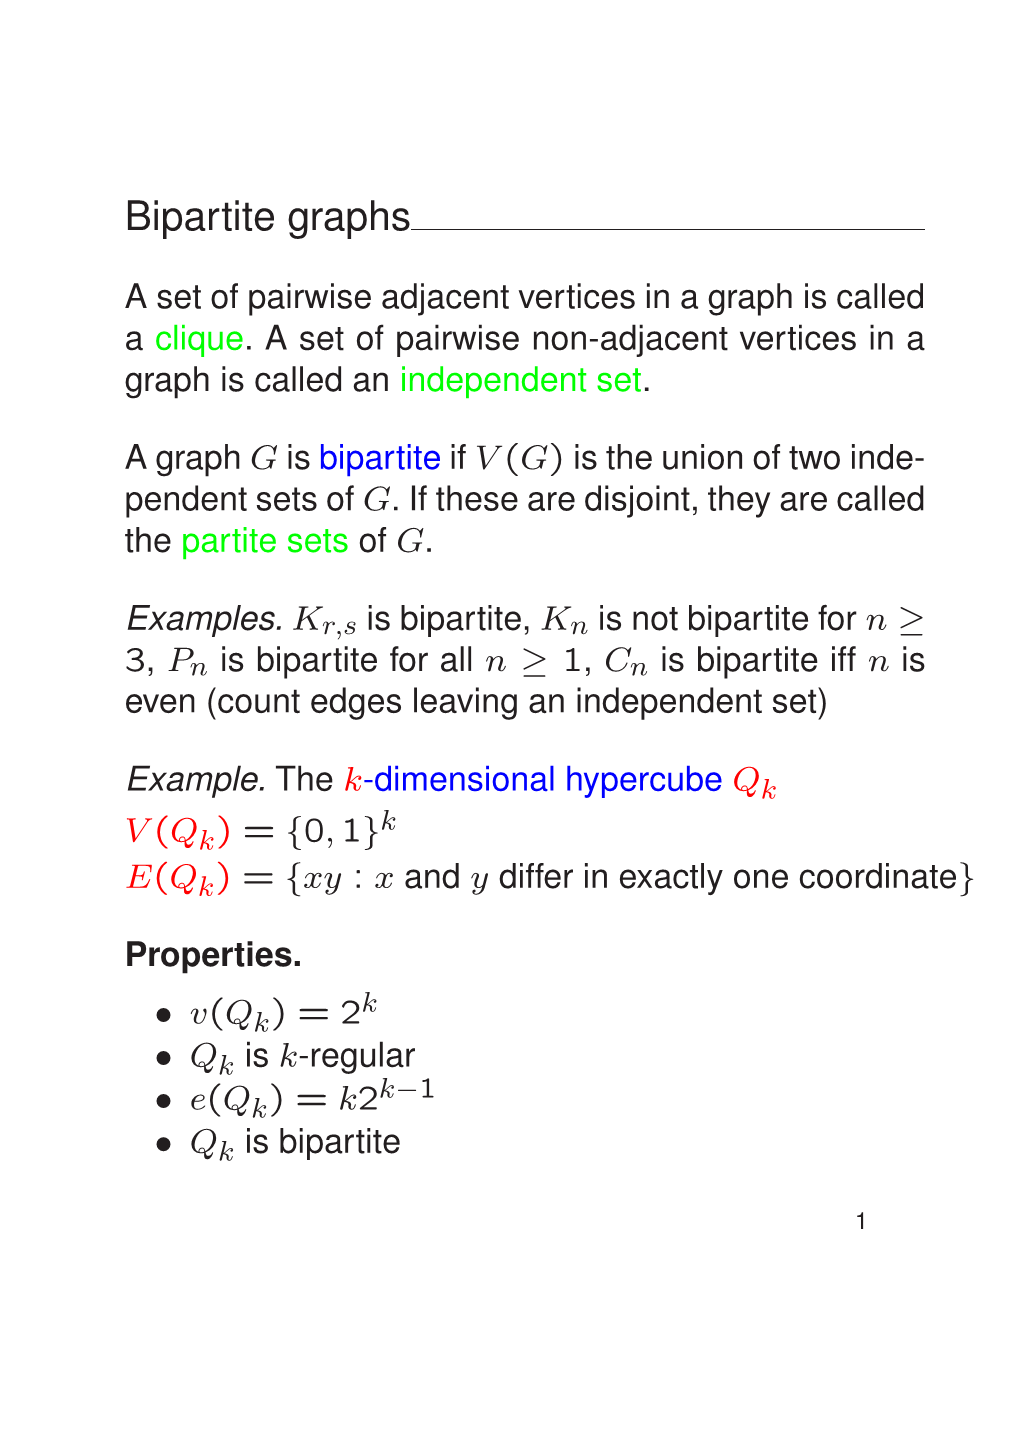 Bipartite Graphs, Connectivity, Eulerian Graphs